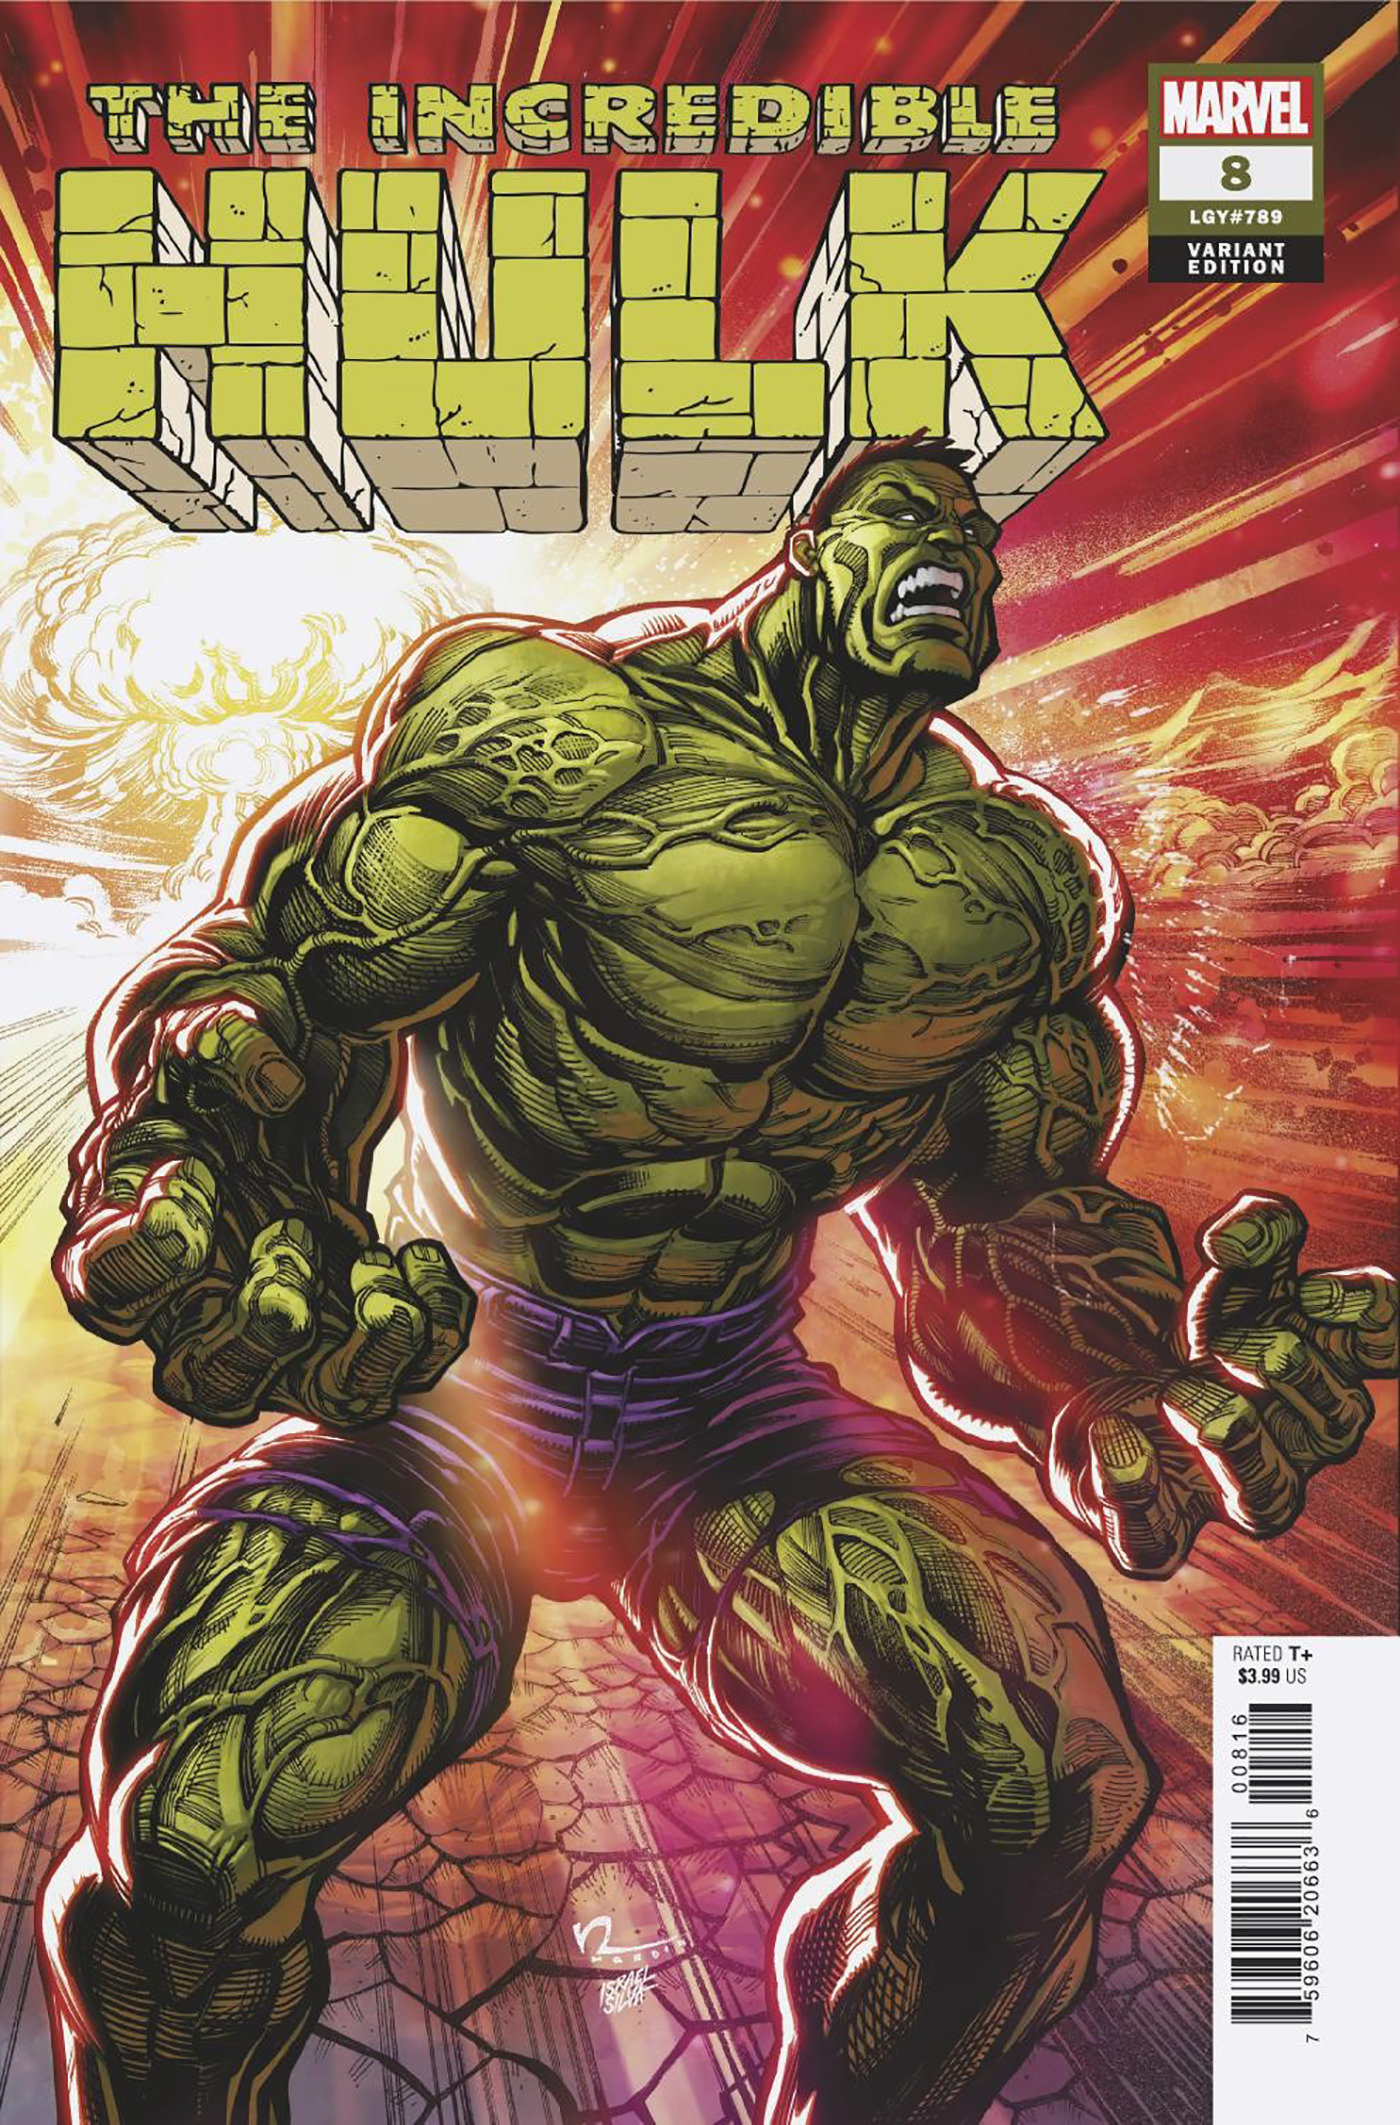 Incredible Hulk #8 Chad Hardin Variant 1 for 25 Incentive